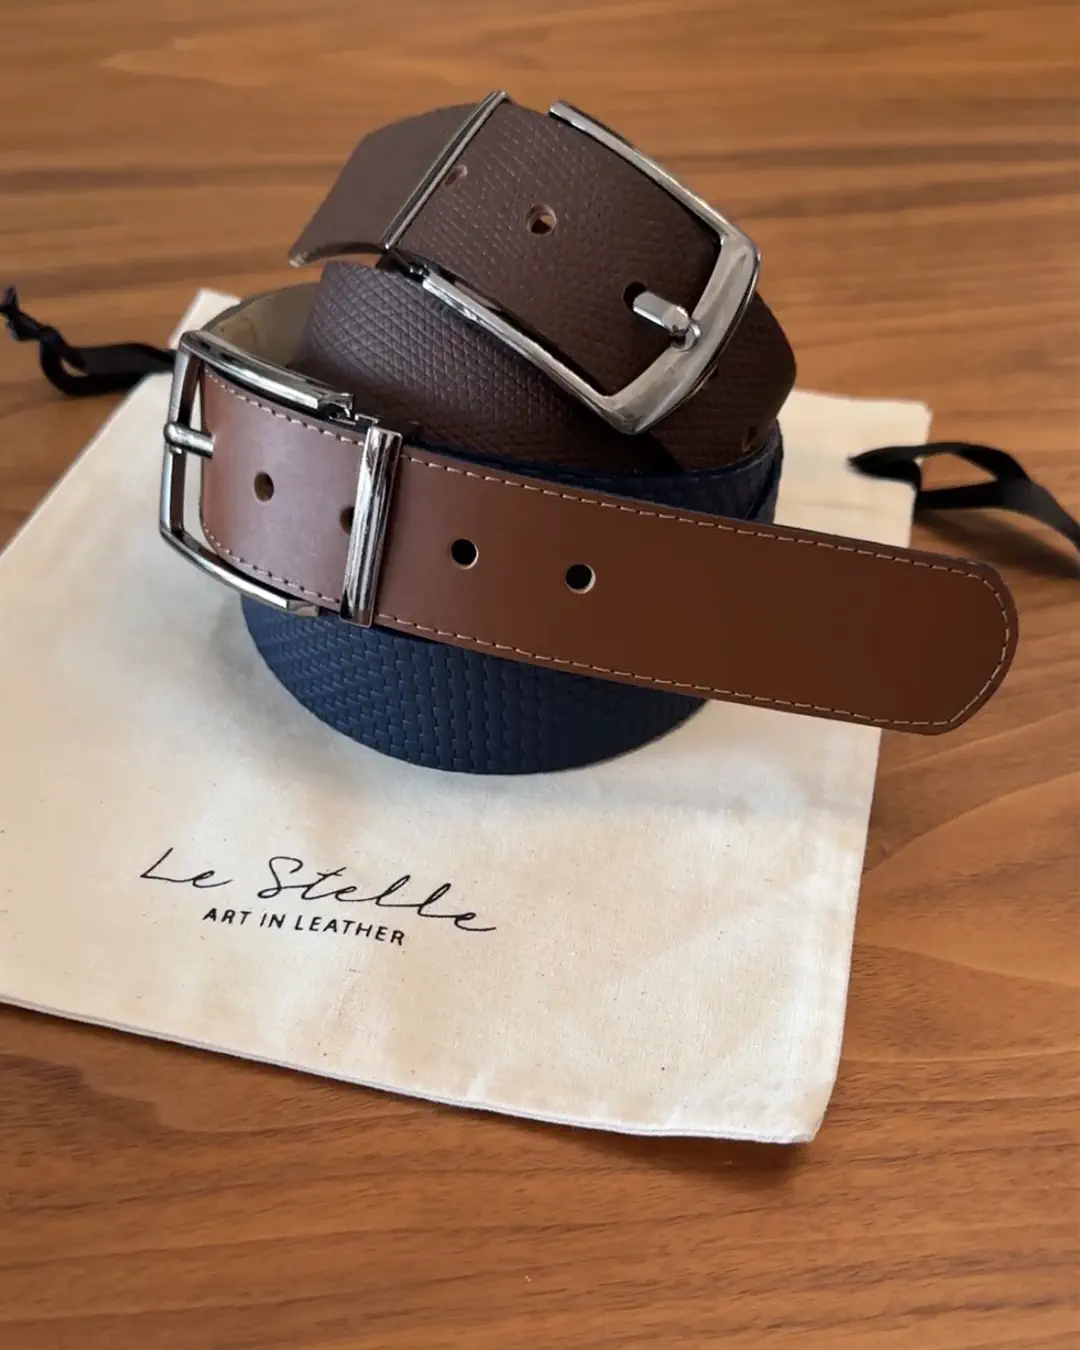 Cinturones hombre  Le Stelle: Art in Leather